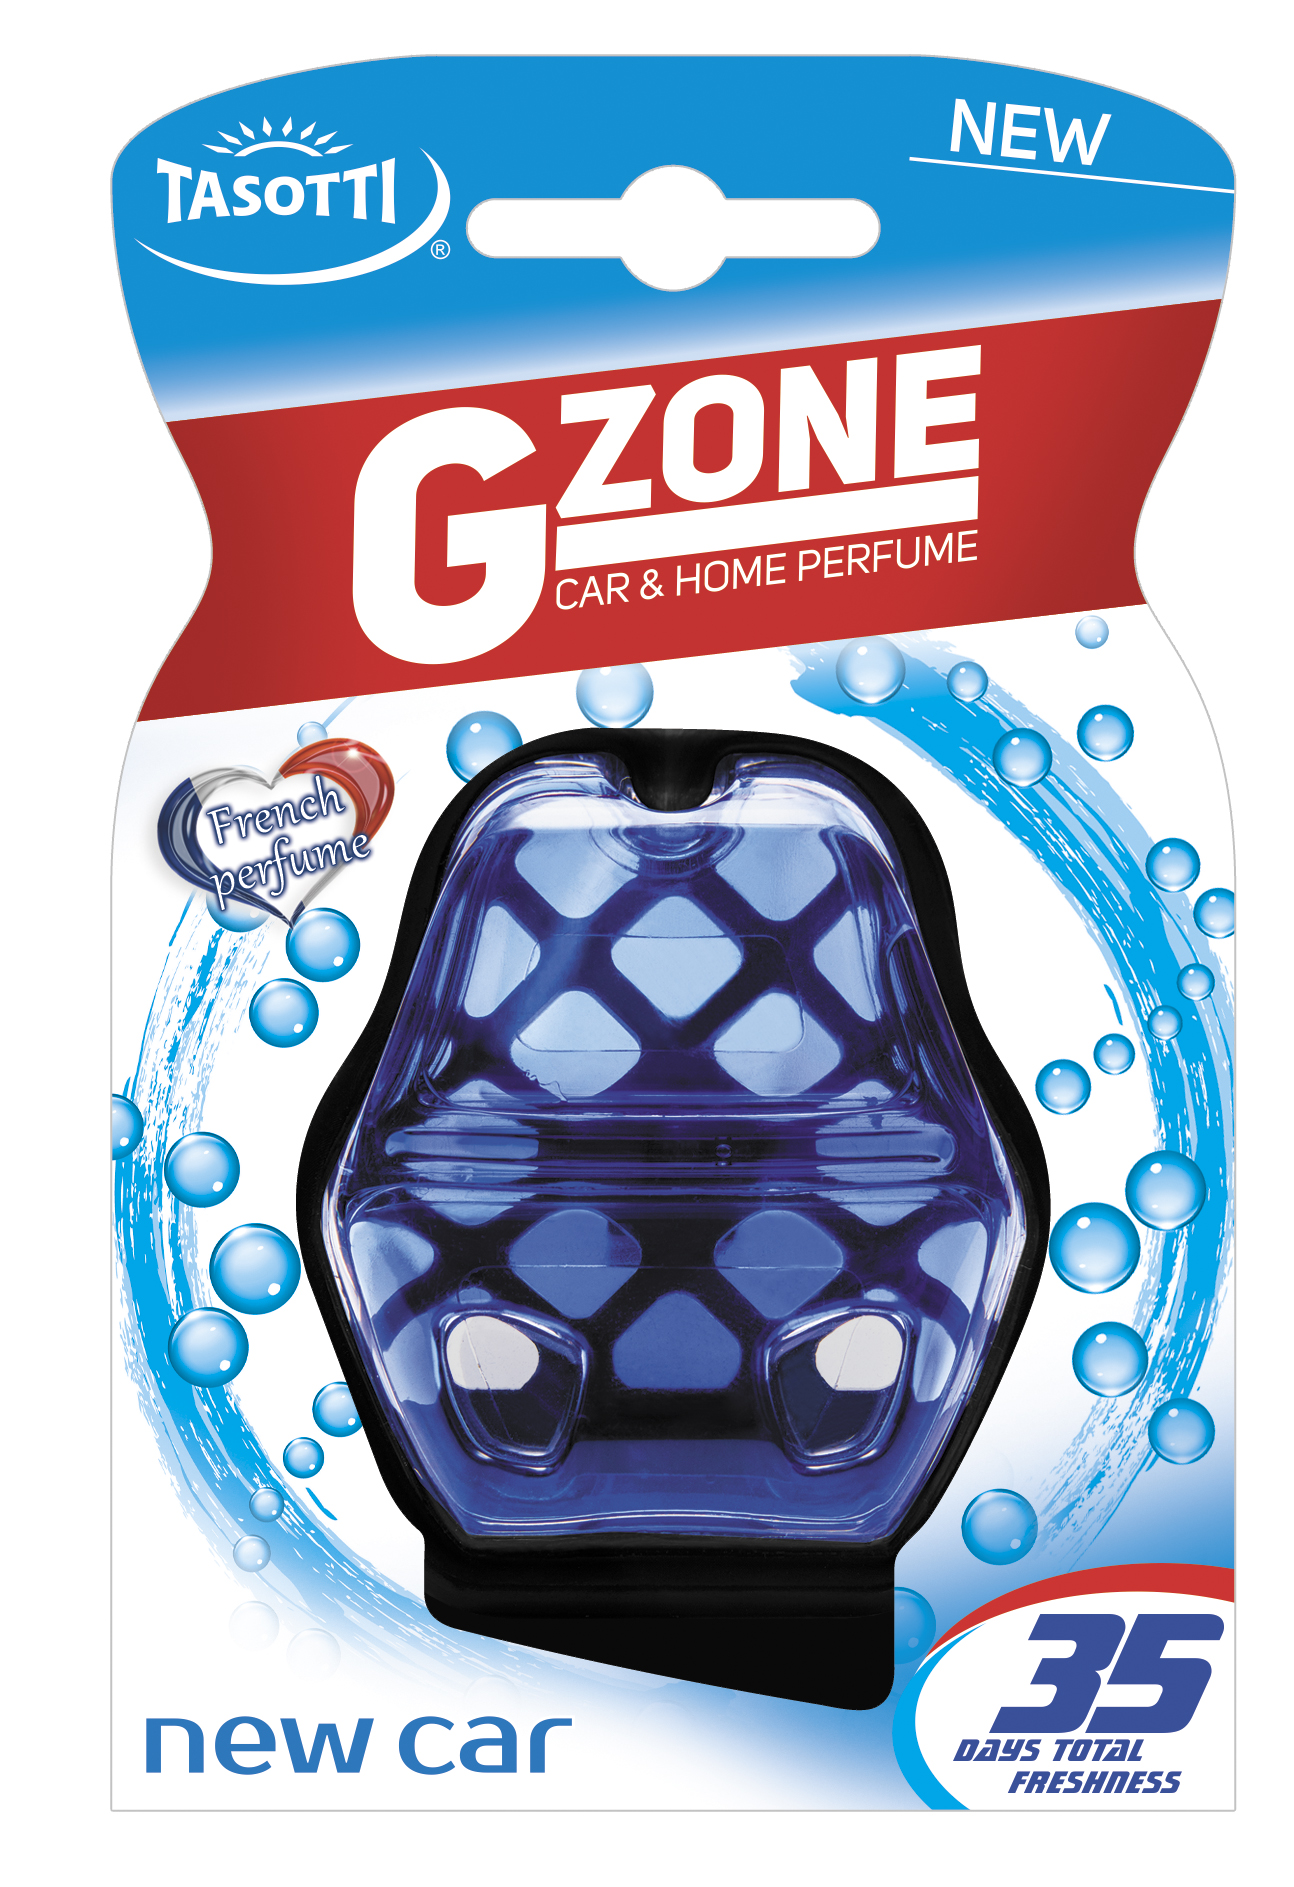 GZone - New car